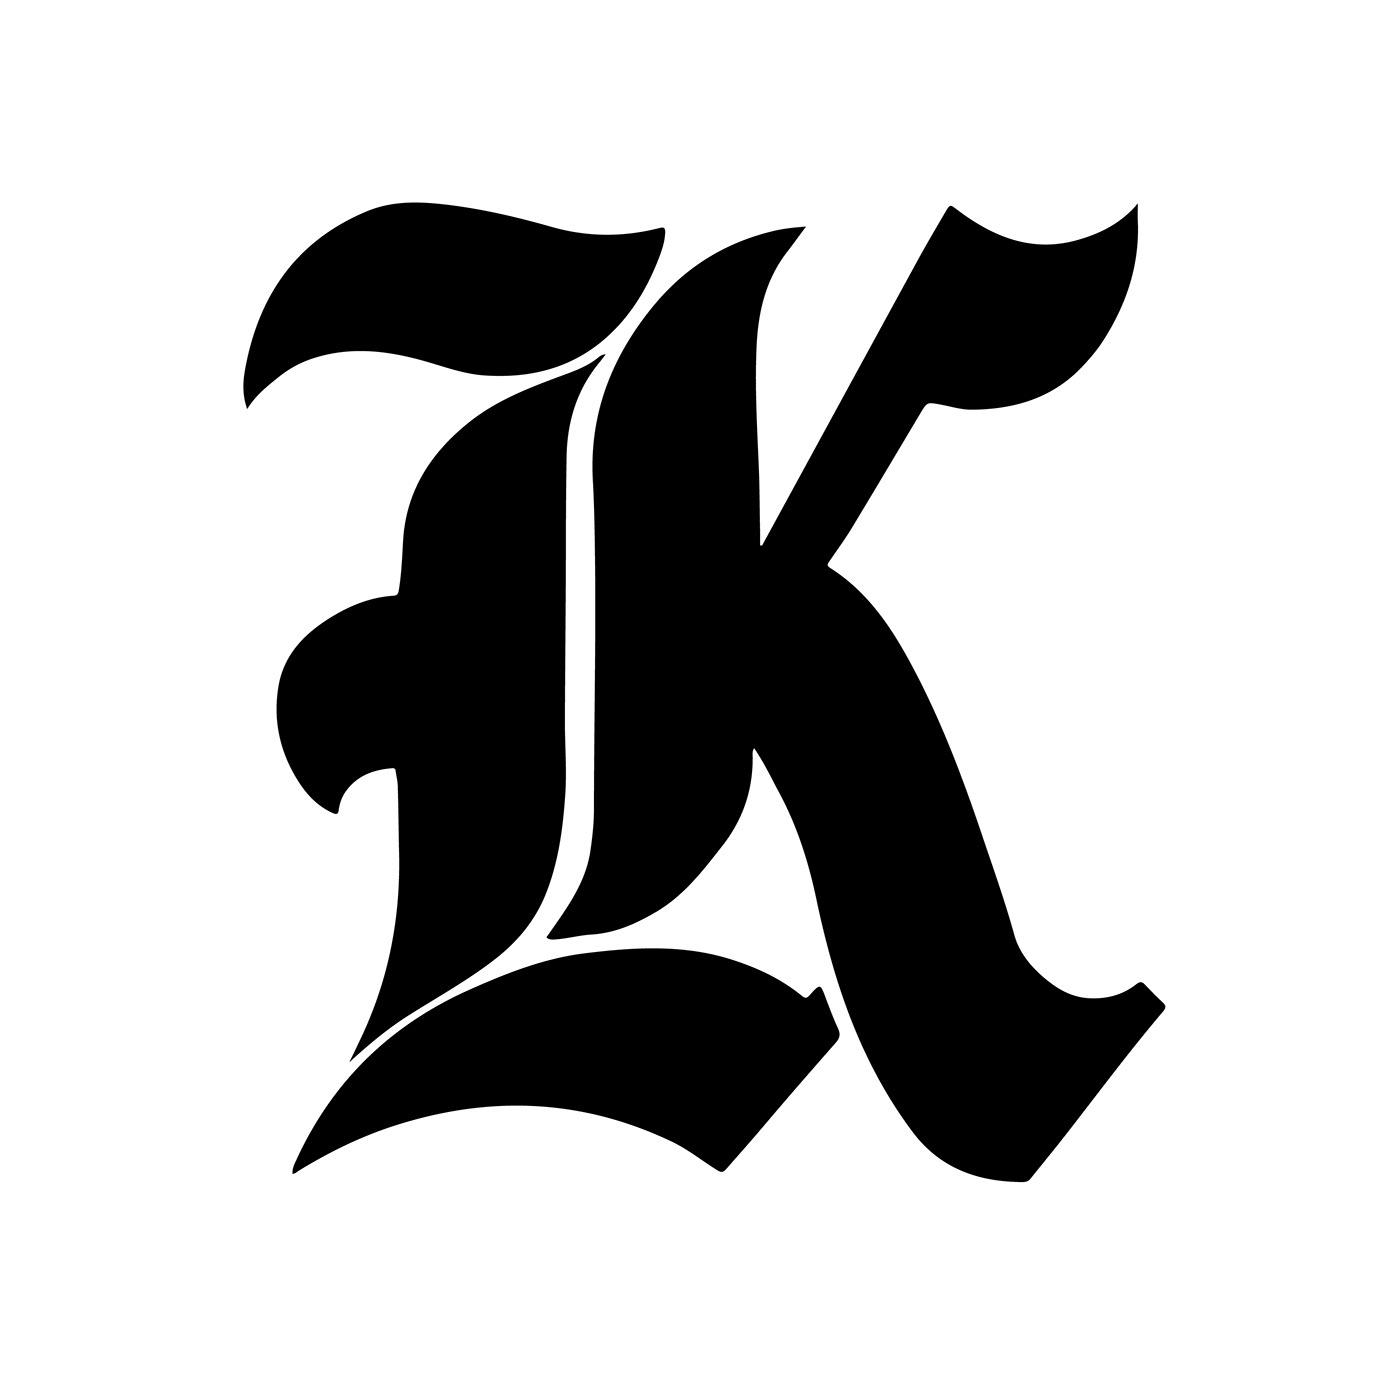 Good old english. Надпись LK. Красивая буква к для логотипа. Логотип с буквой l. Логотип ЛК.